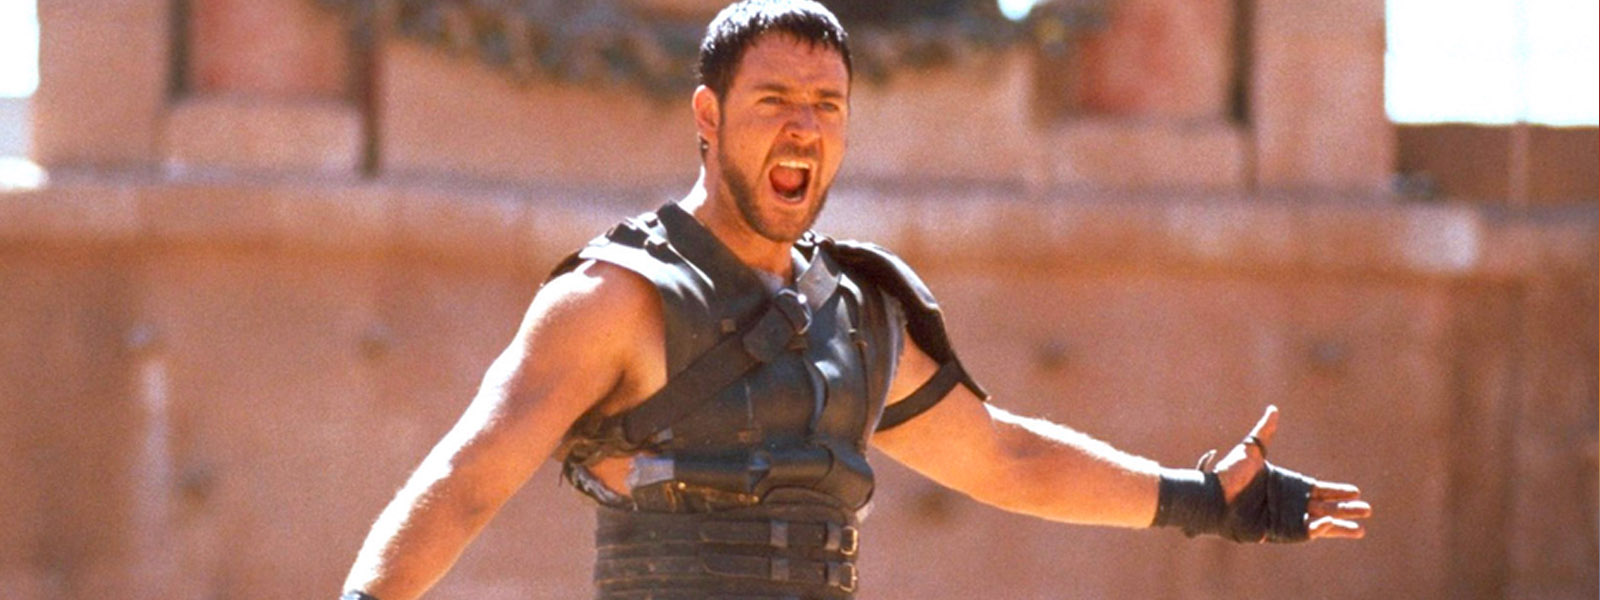 Gladiator sequel in the works - Ridley Scott